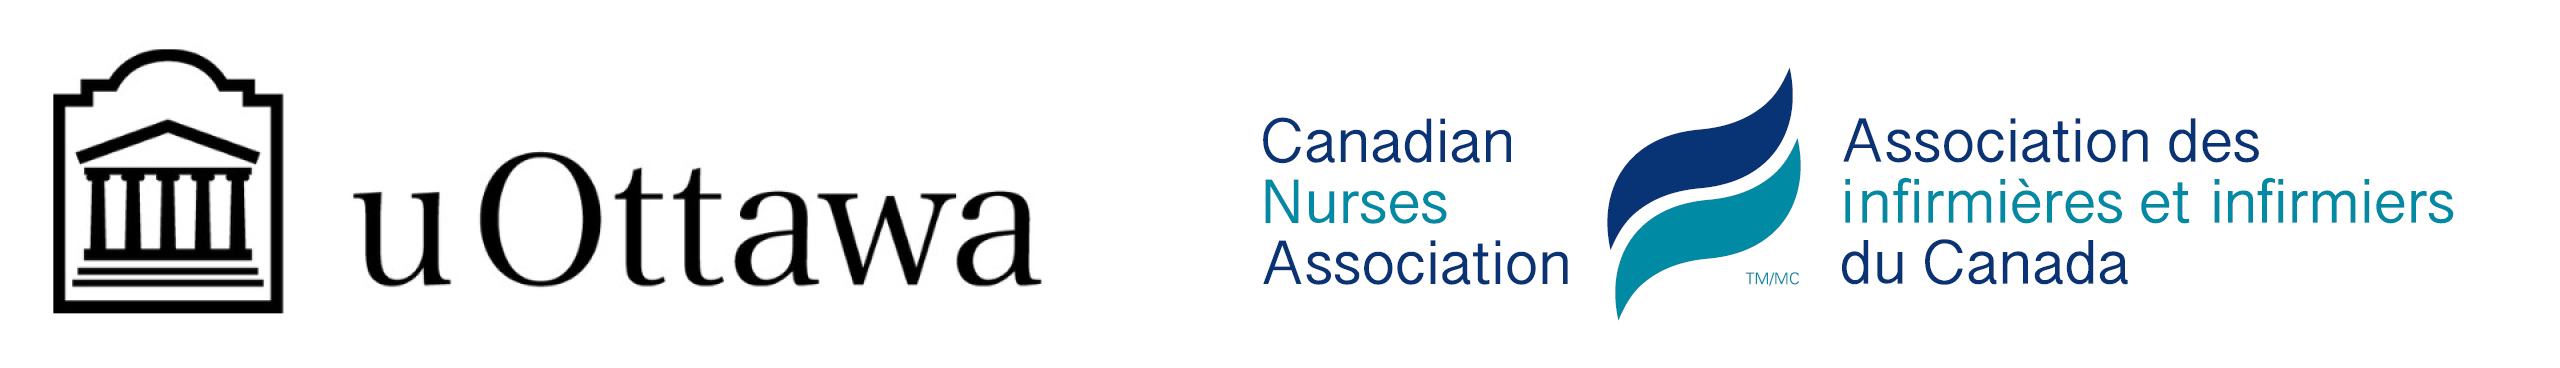 University of Ottawa, Canadian Nurses Association